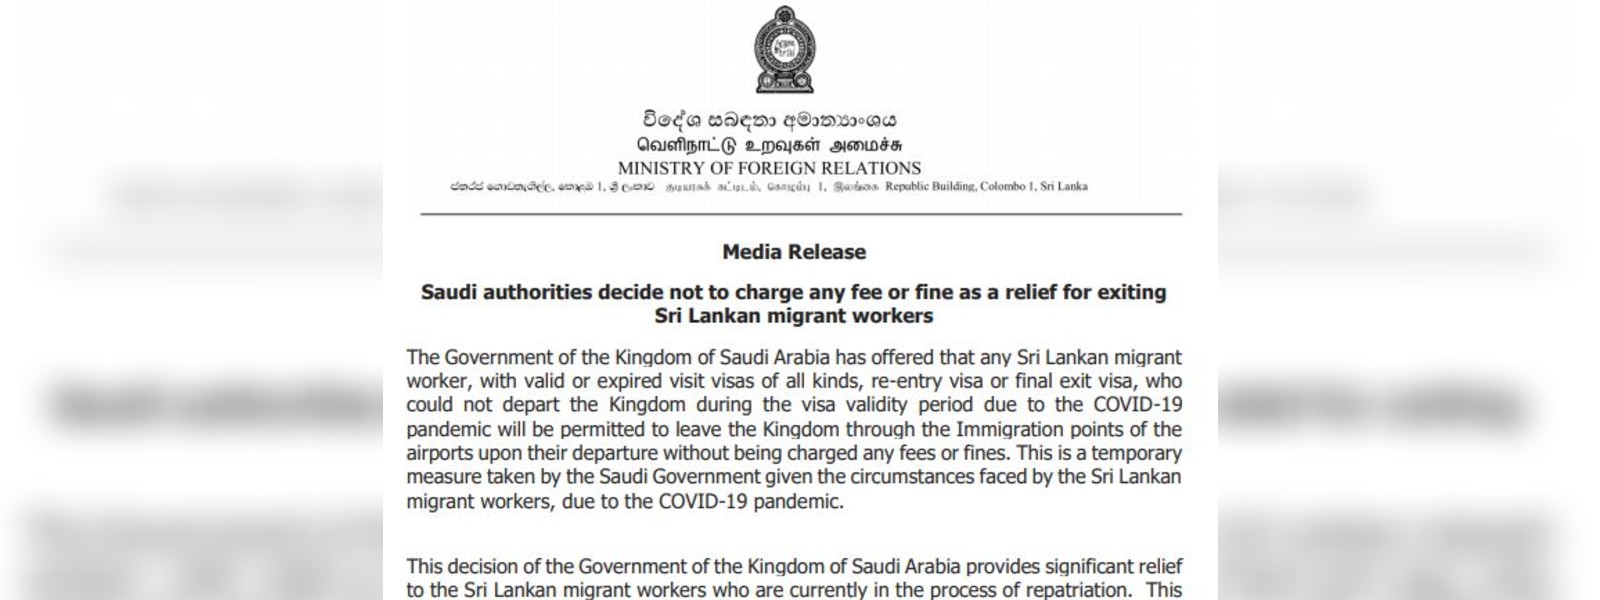 Saudi authorities decide not to charge Sri Lankans